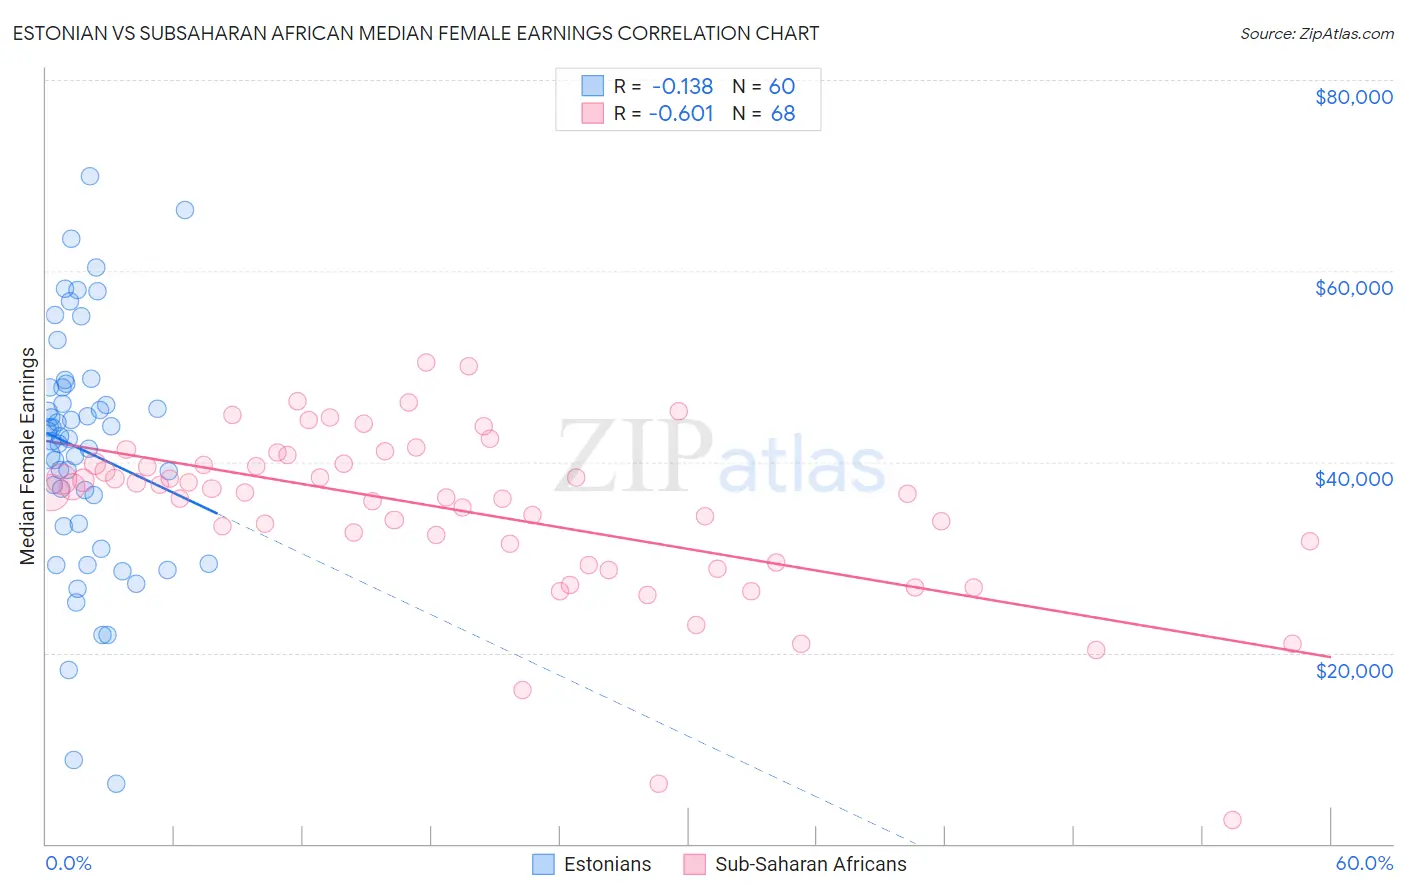 Estonian vs Subsaharan African Median Female Earnings